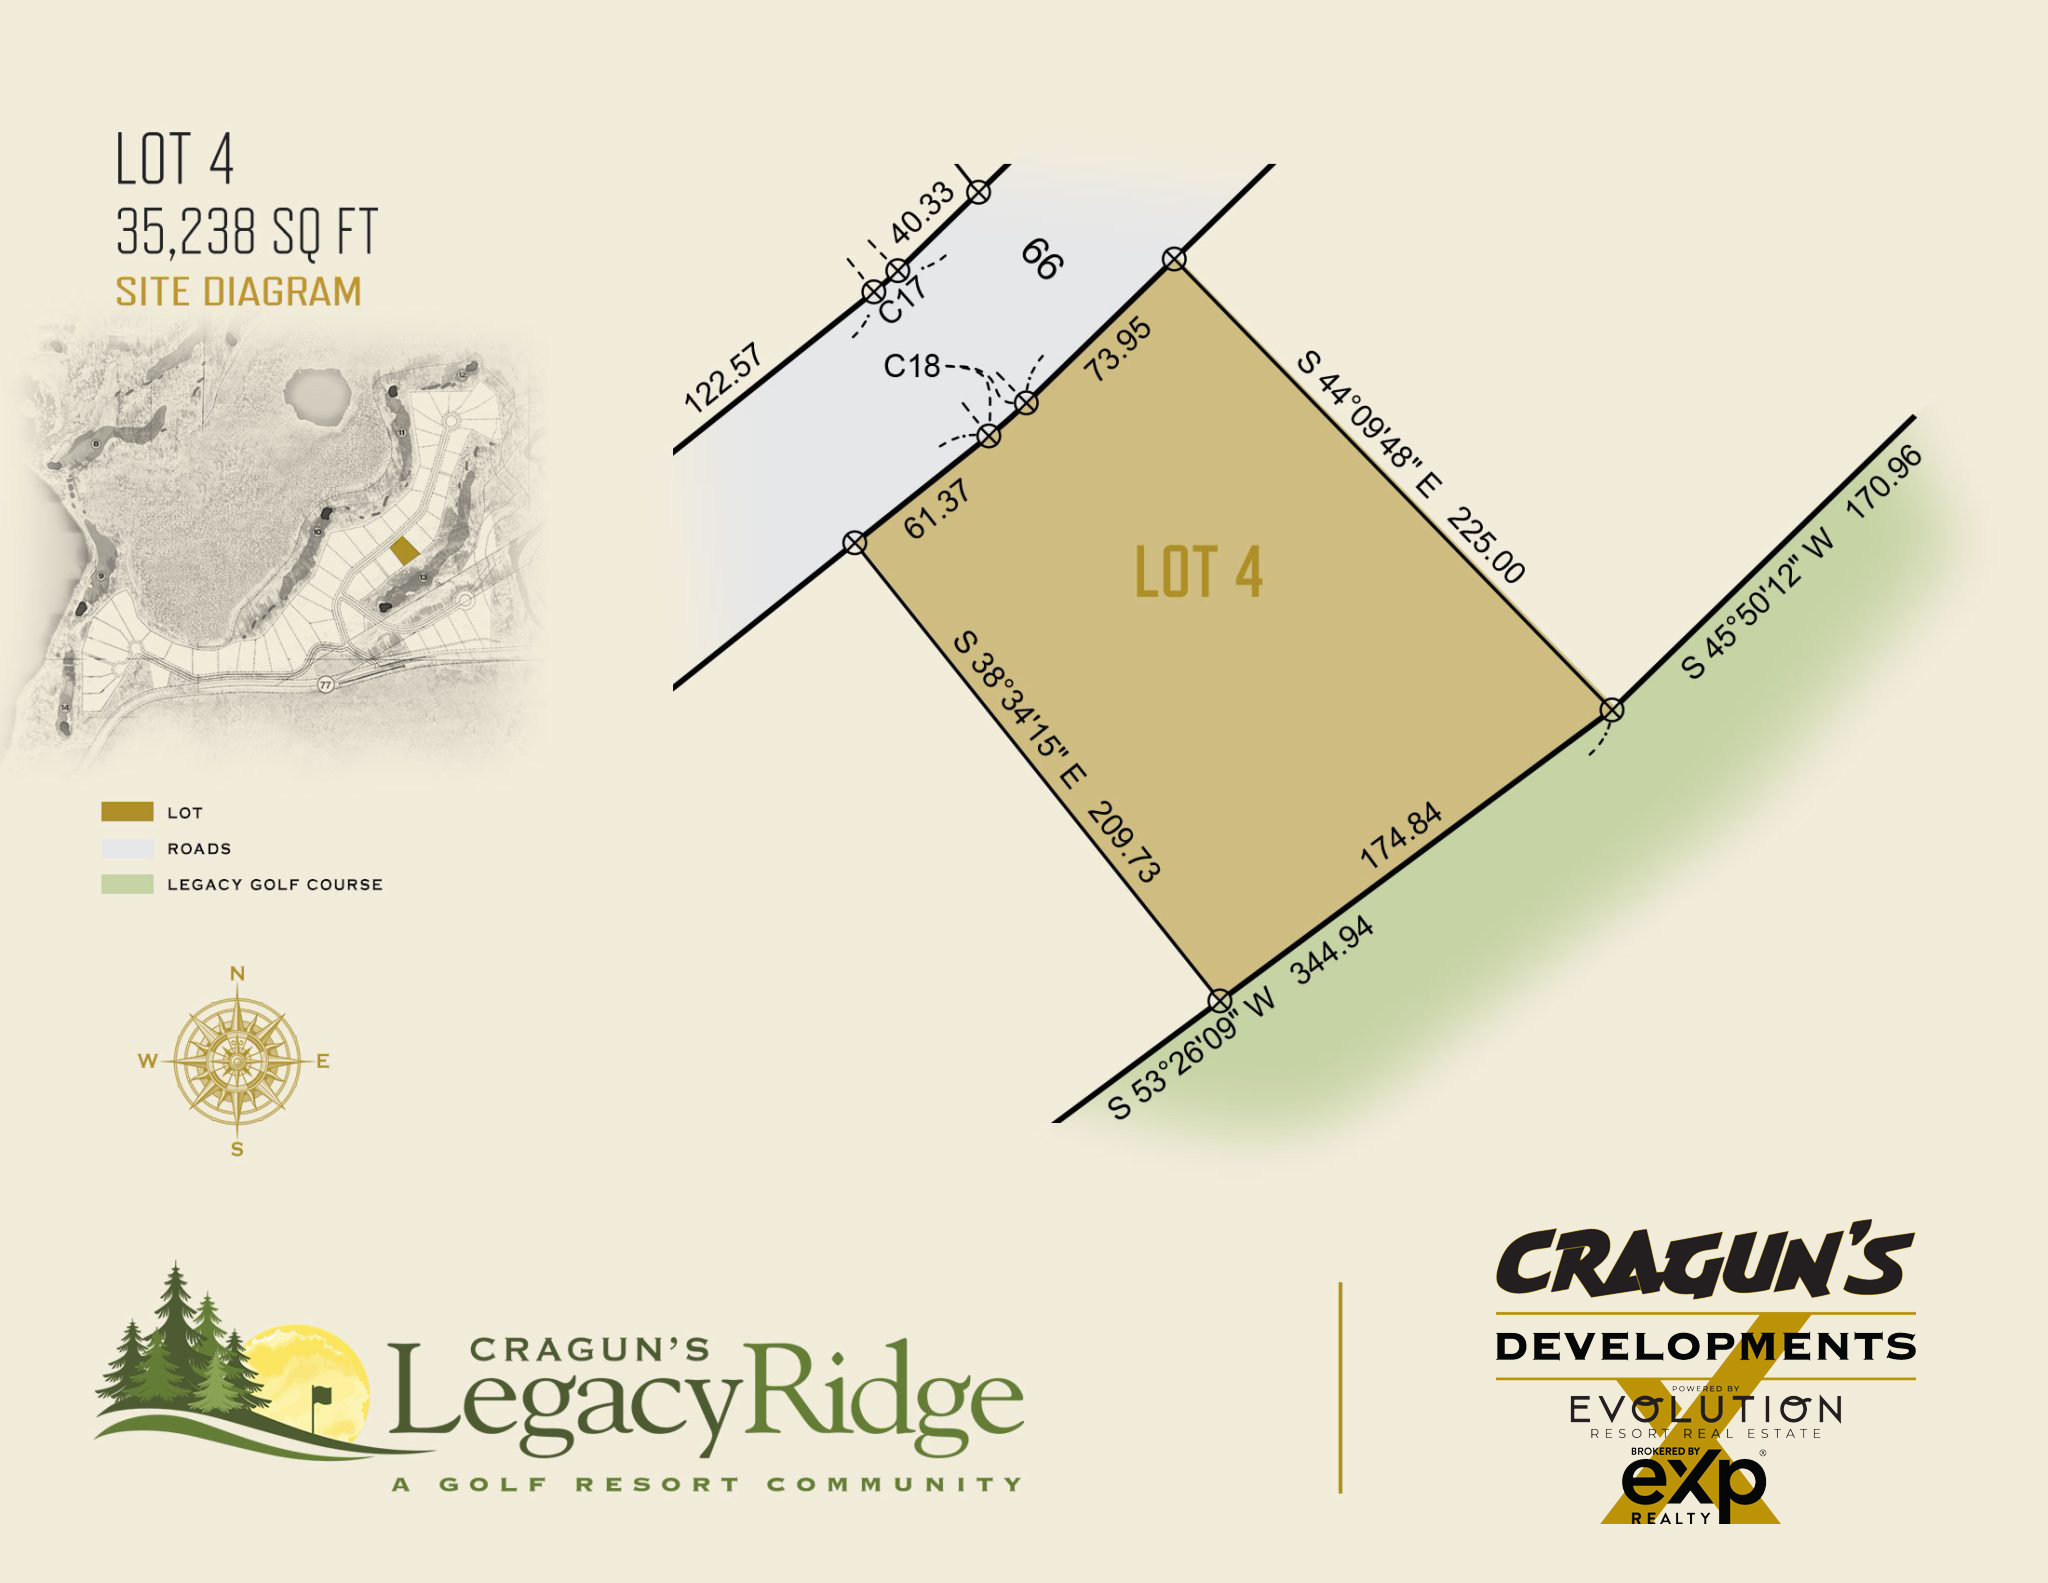 Legacy Ridge Lot 4 at Cragun's Developments in Brainerd, MN